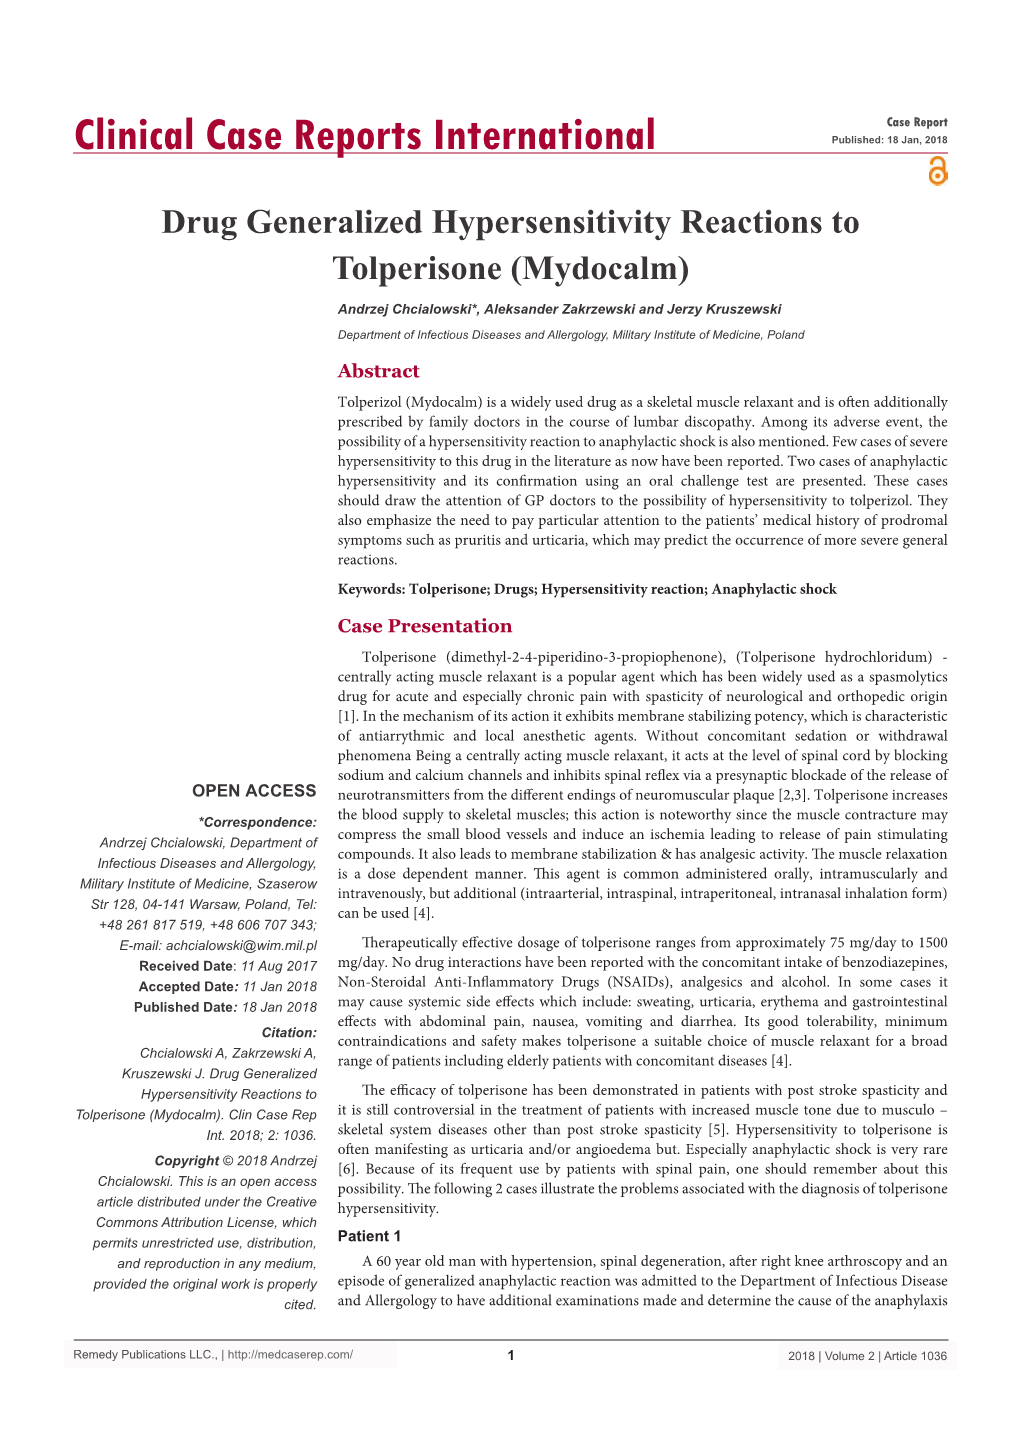 Drug Generalized Hypersensitivity Reactions to Tolperisone (Mydocalm)